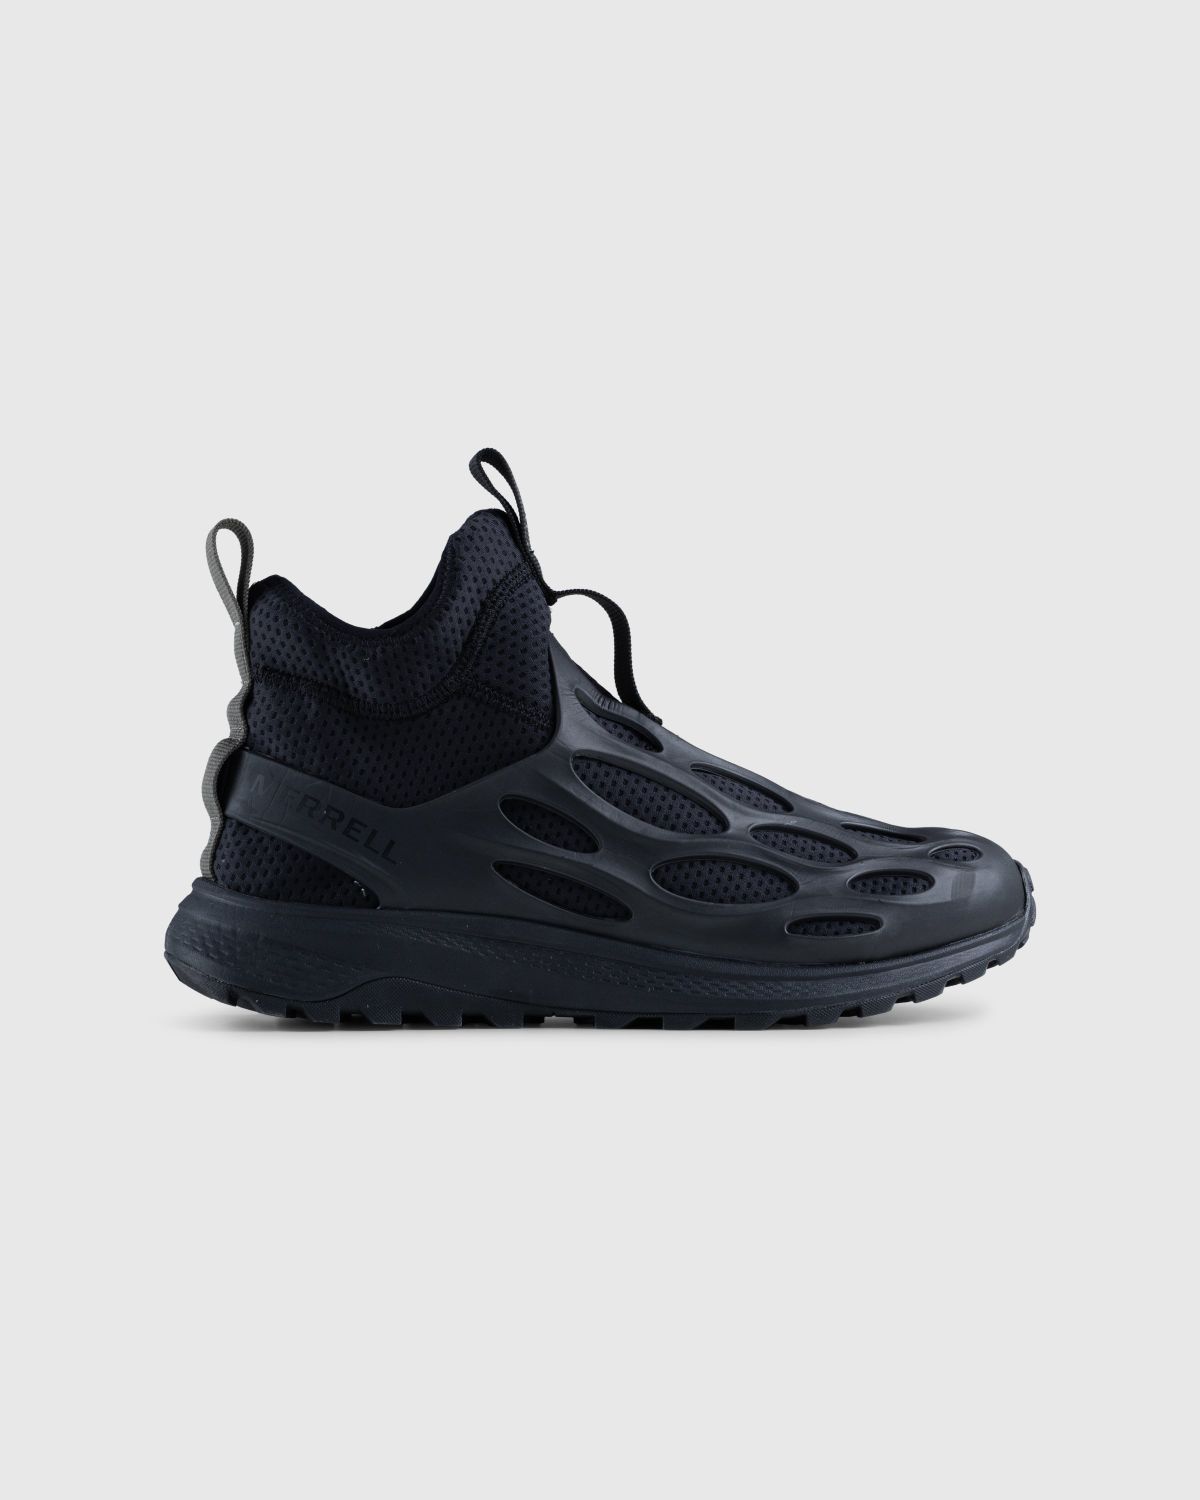 Merrell – Hydro Runner Mid GTX Black  - Sneakers - Black - Image 1